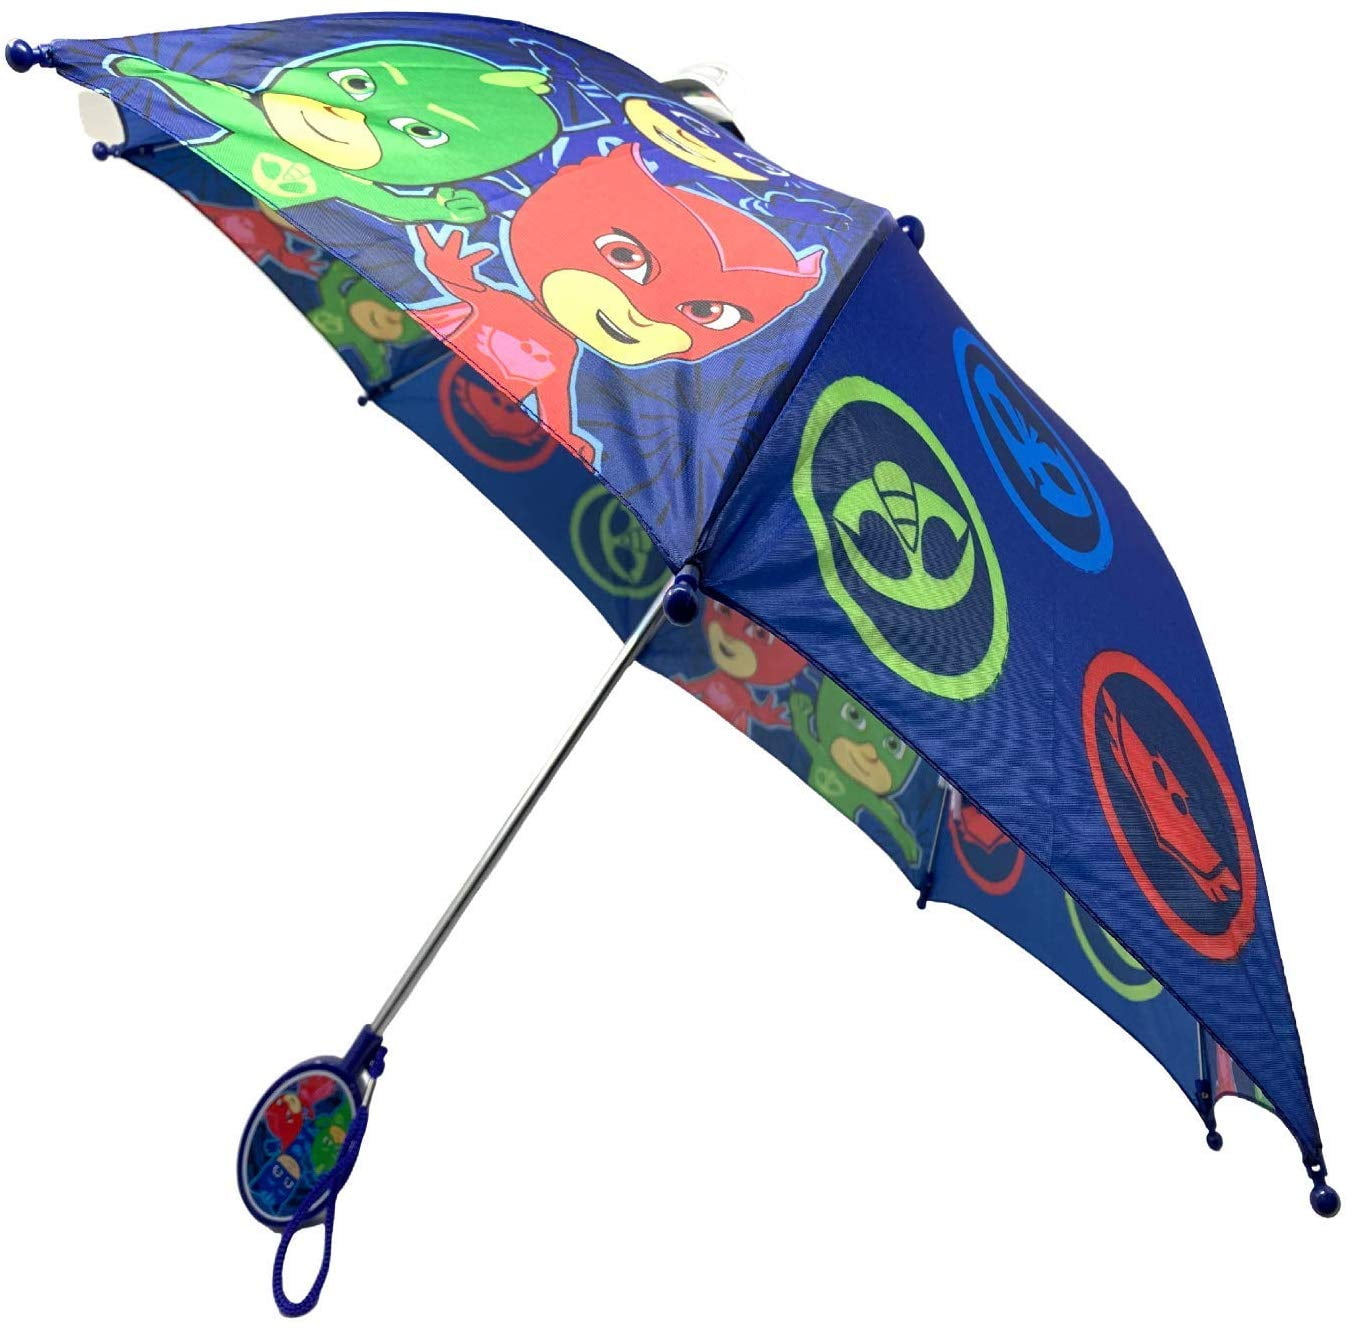 Disney Toy Story 4 Blue umbrella Molded Umbrella for boy girls 43834209089 